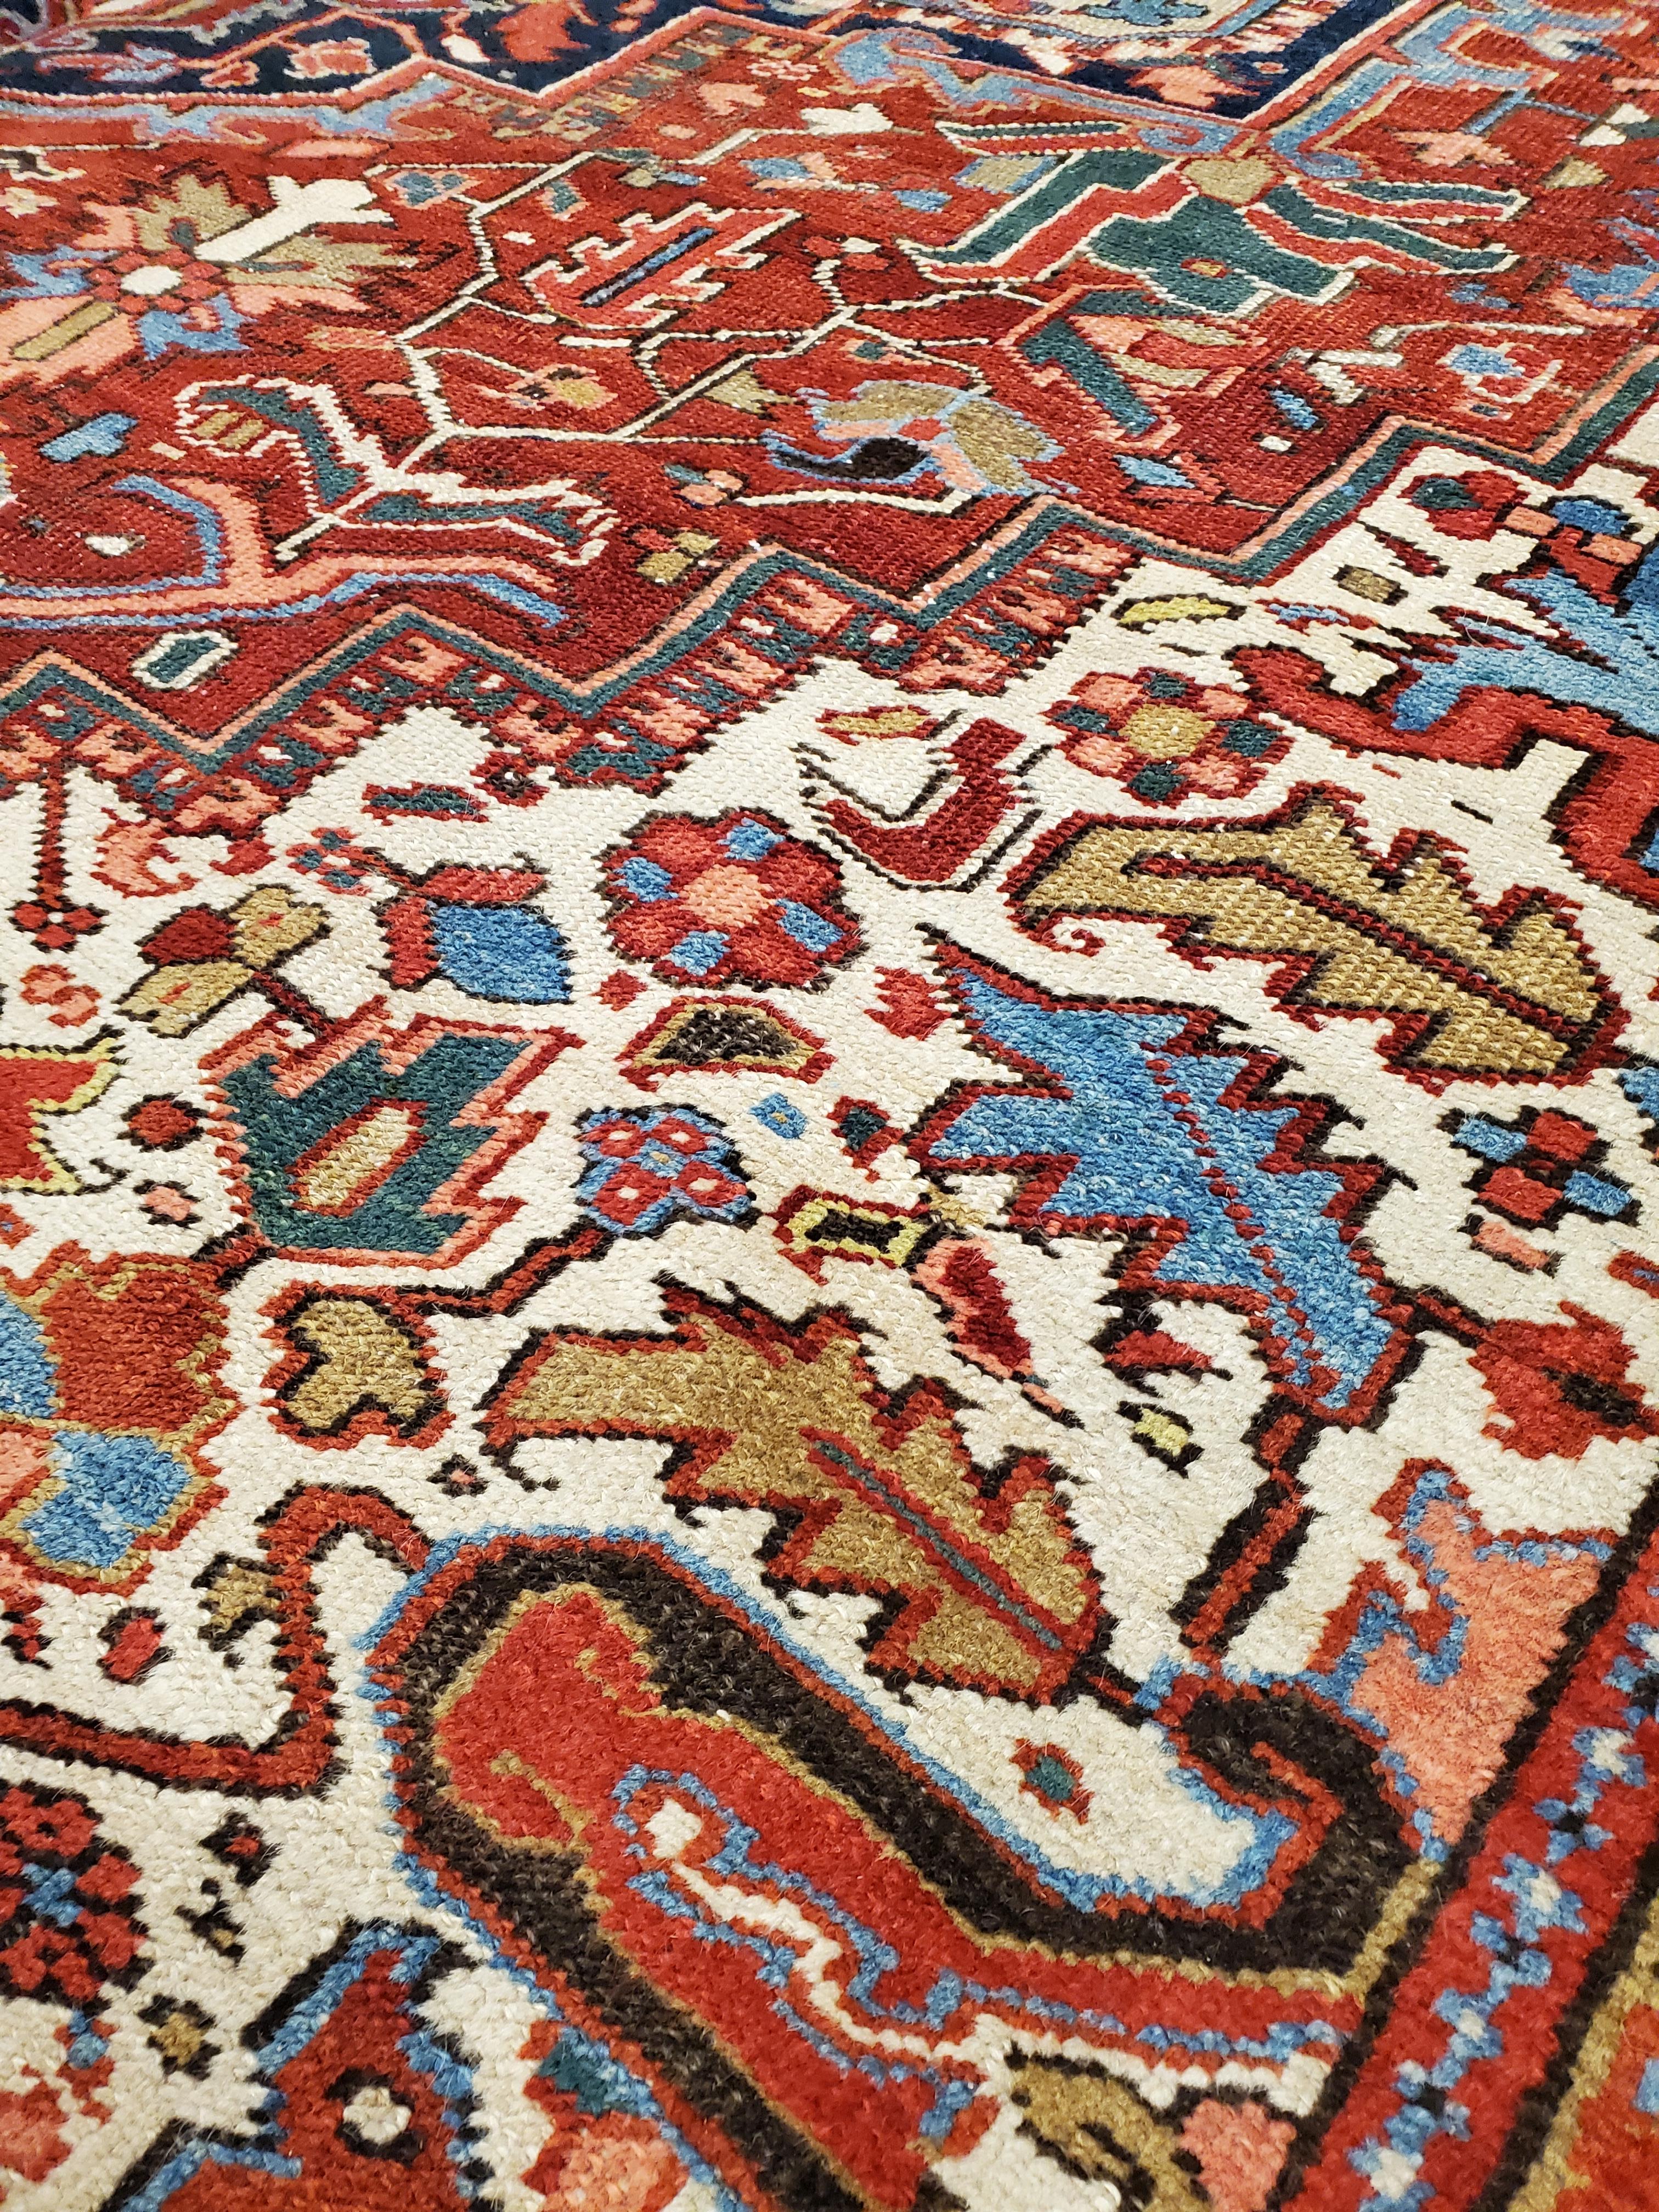 Antique Persian Heriz Carpet, Handmade Wool Oriental Rug, Rust, Navy, Lt Blue For Sale 5